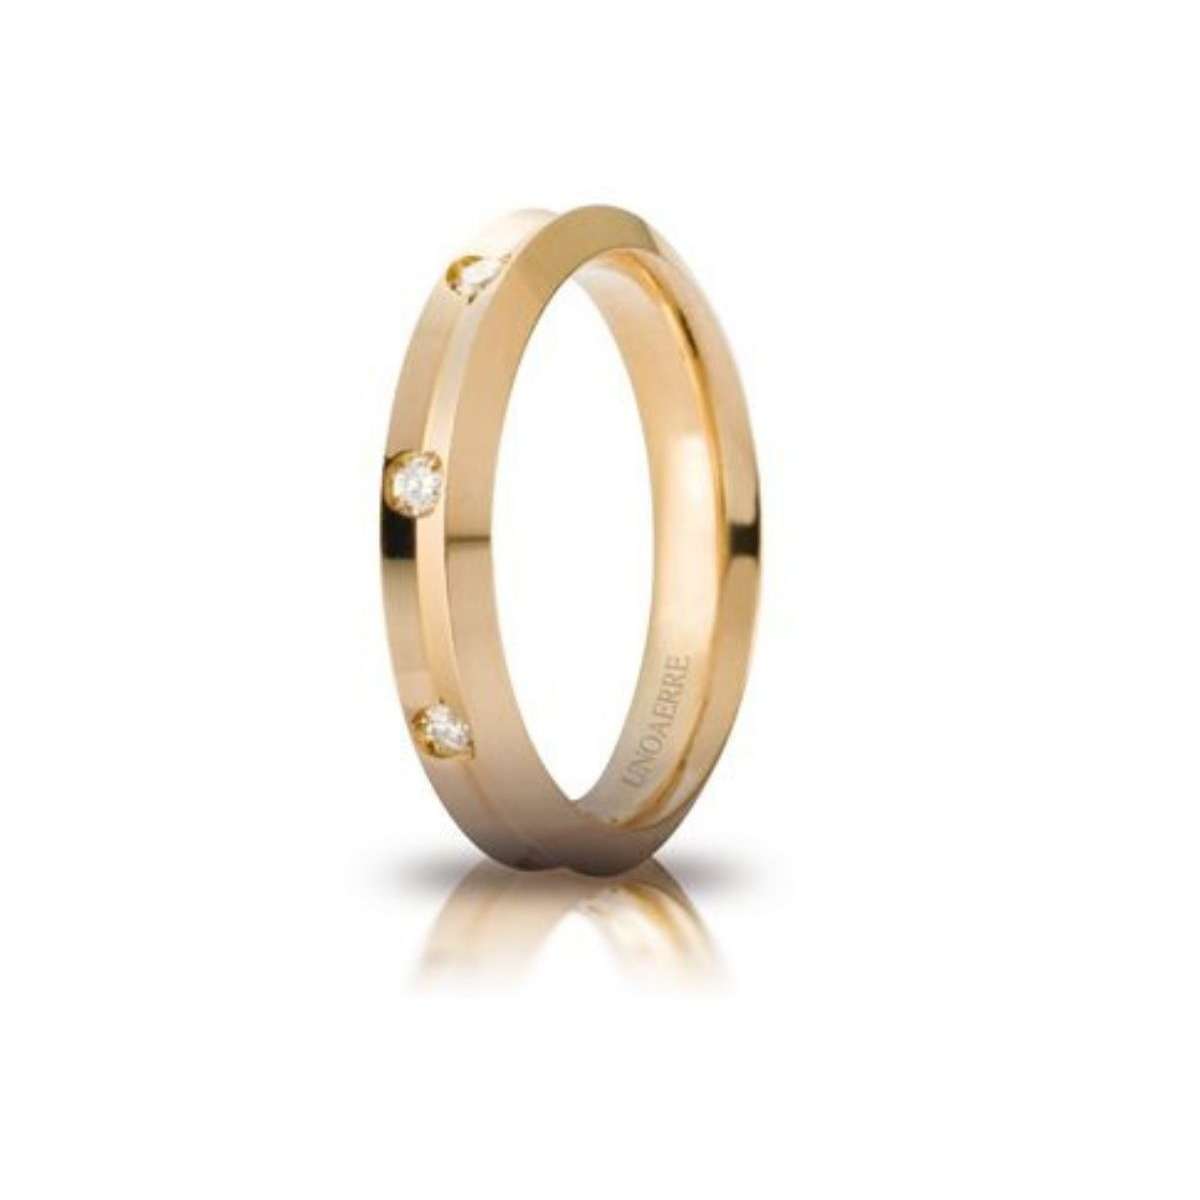 Unoaerre wedding ring in yellow gold with 8 diamonds 0.16 carat